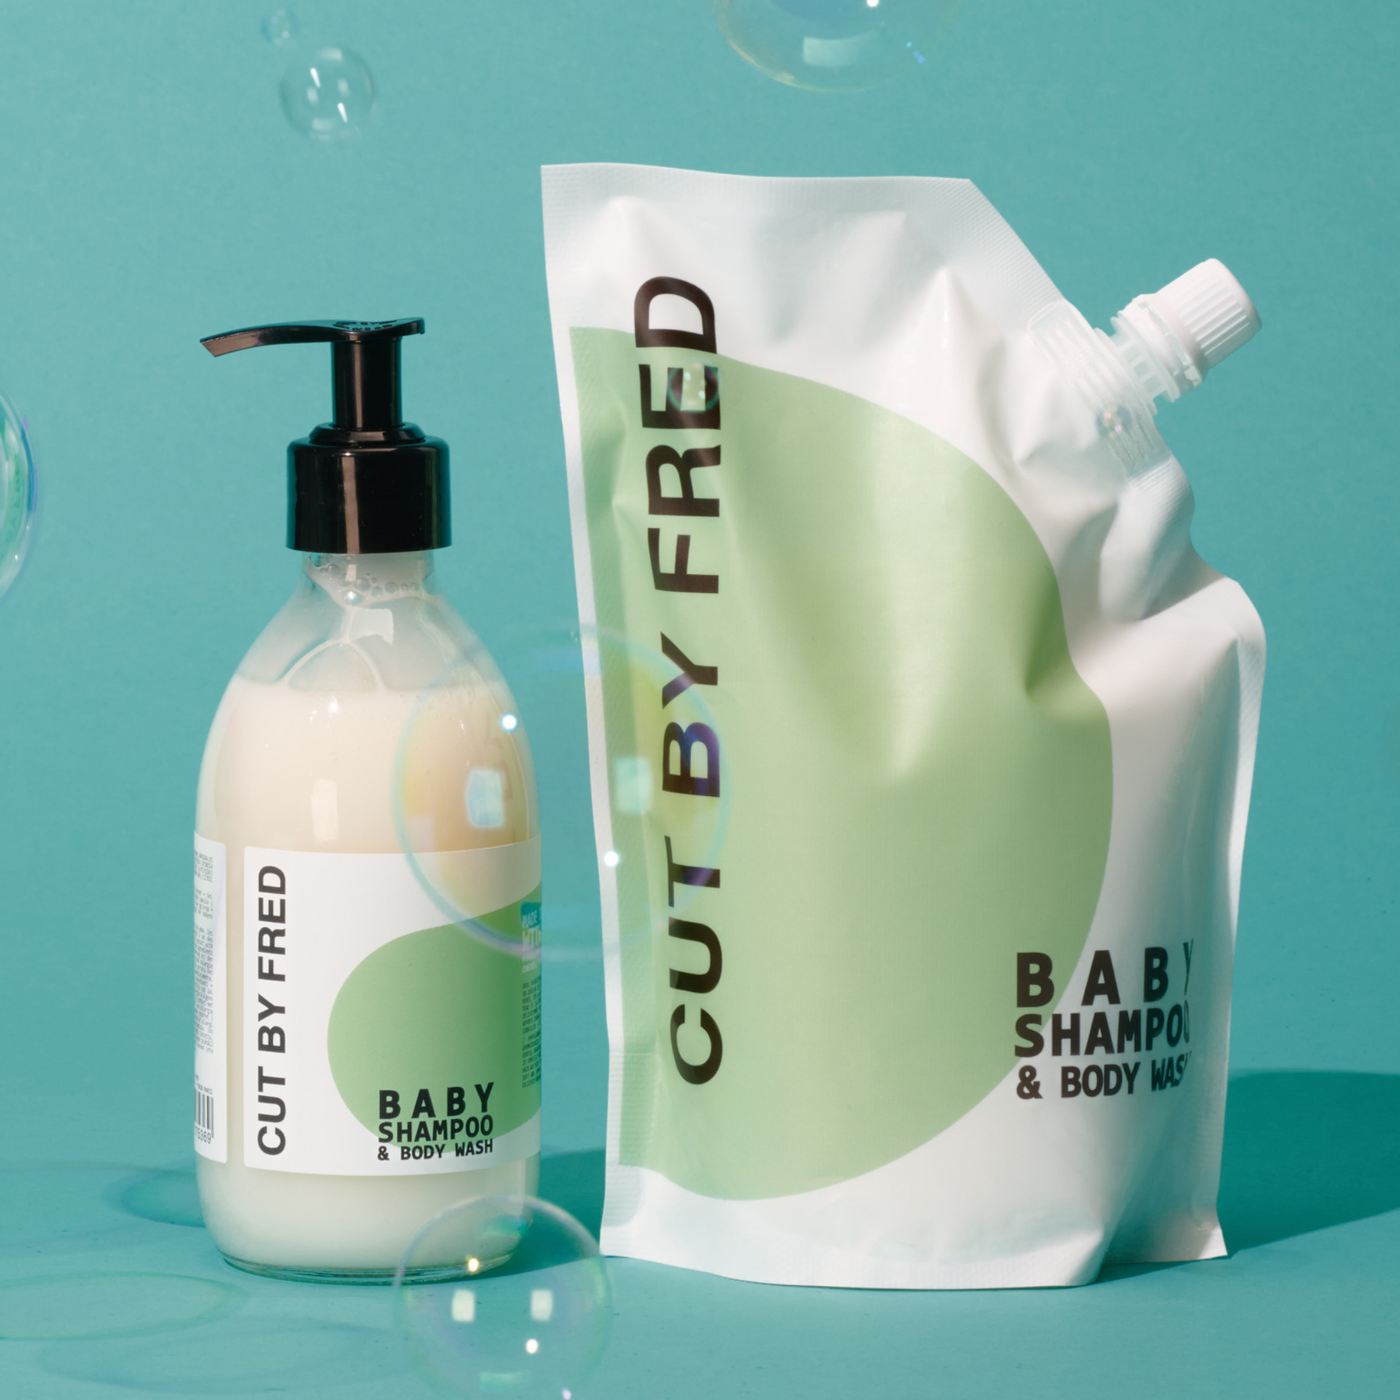 Baby Shampoo & Body Wash + Recharge